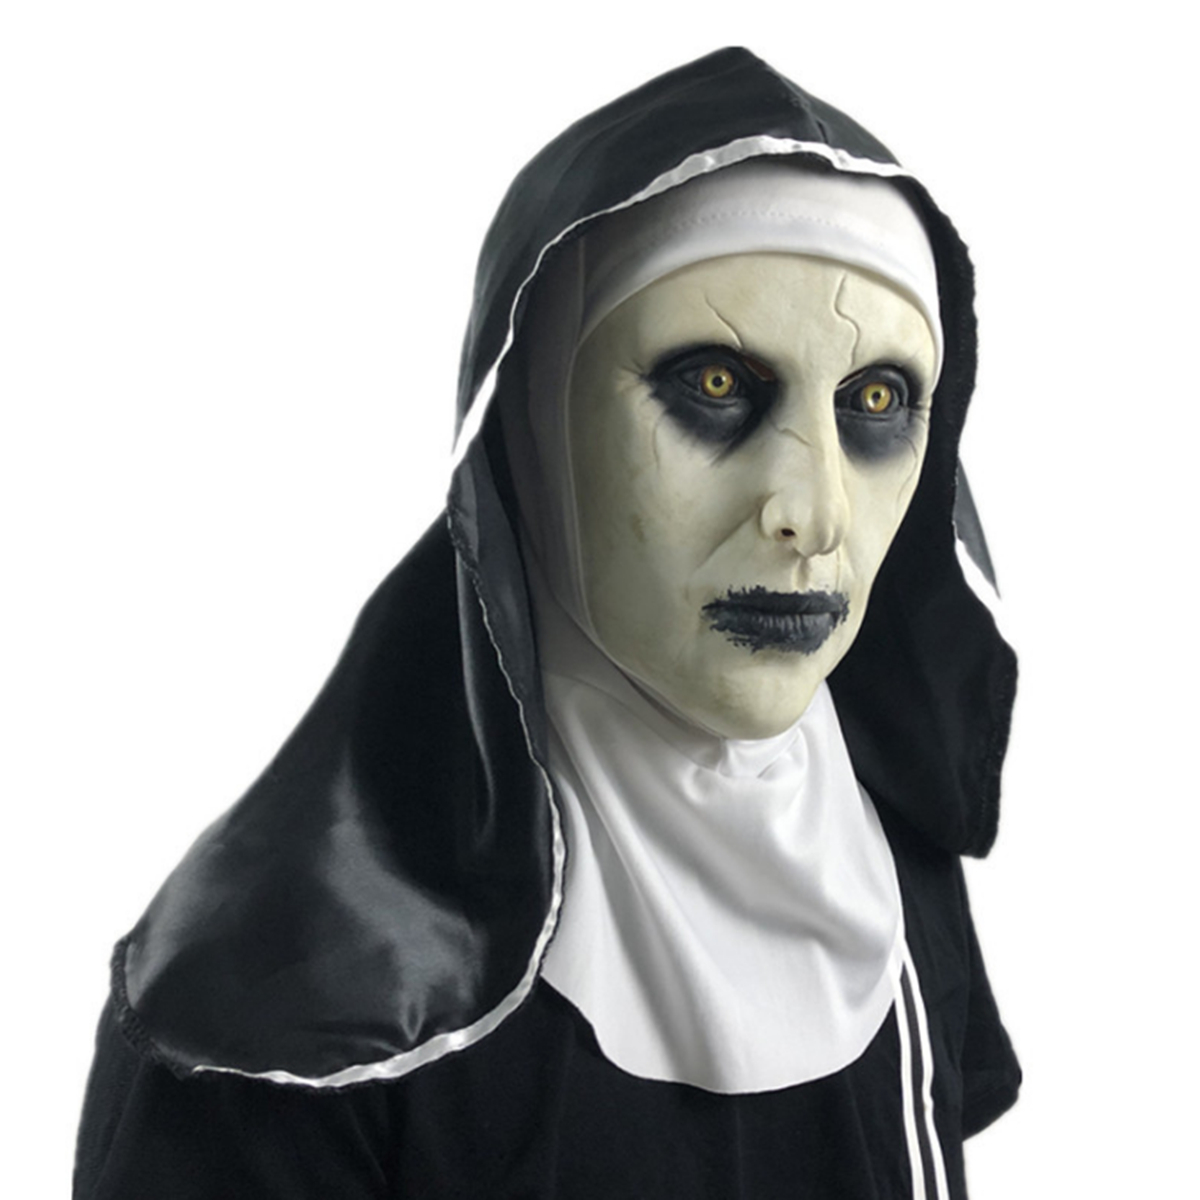 

Horror Mask Halloween Nun Cosplay Unheimlich Vollkopfmaske Latexmaske Party